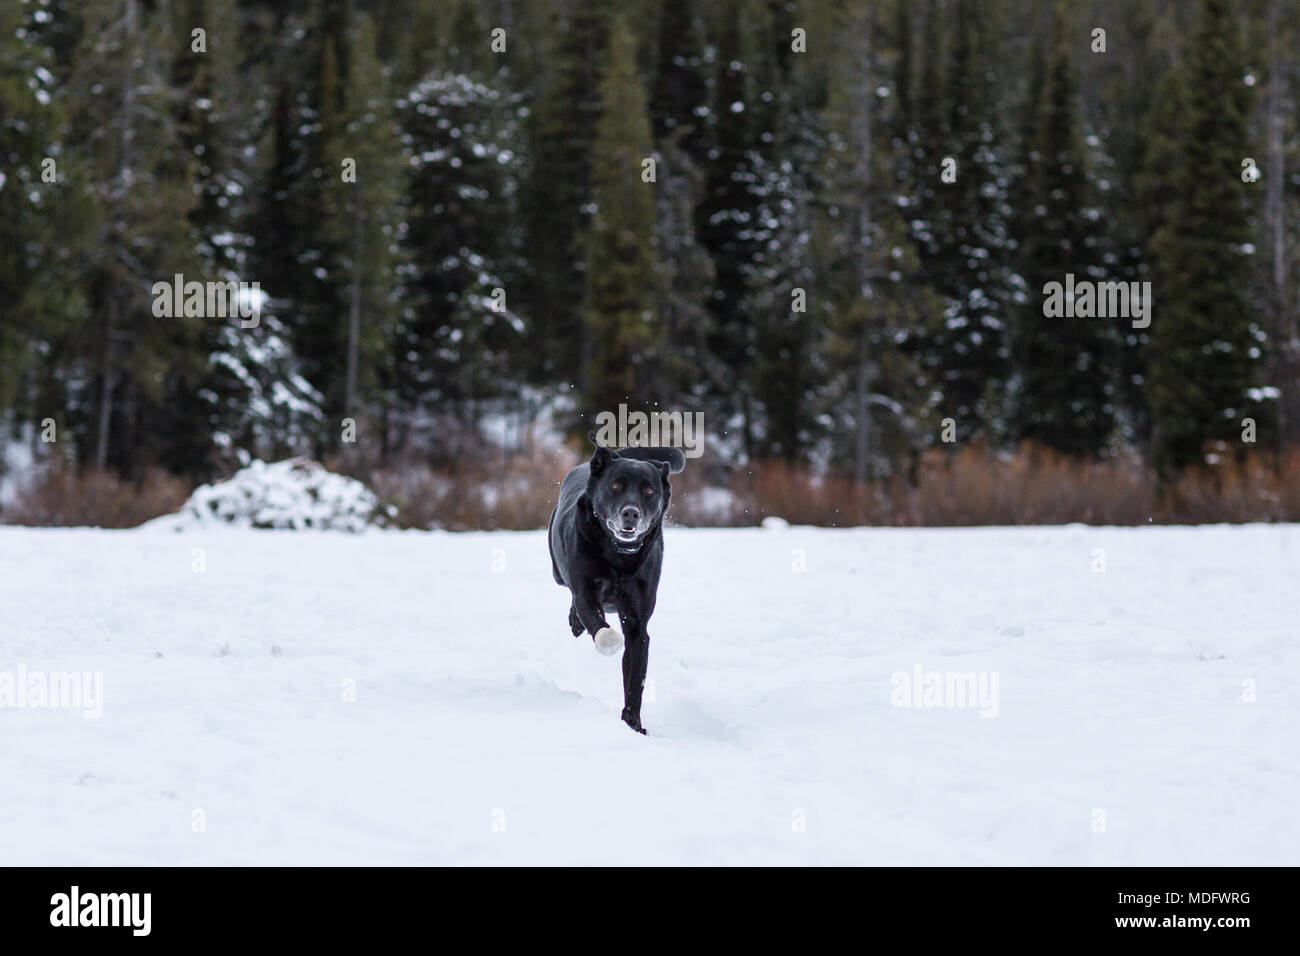 Black dog running in snow Stock Photo